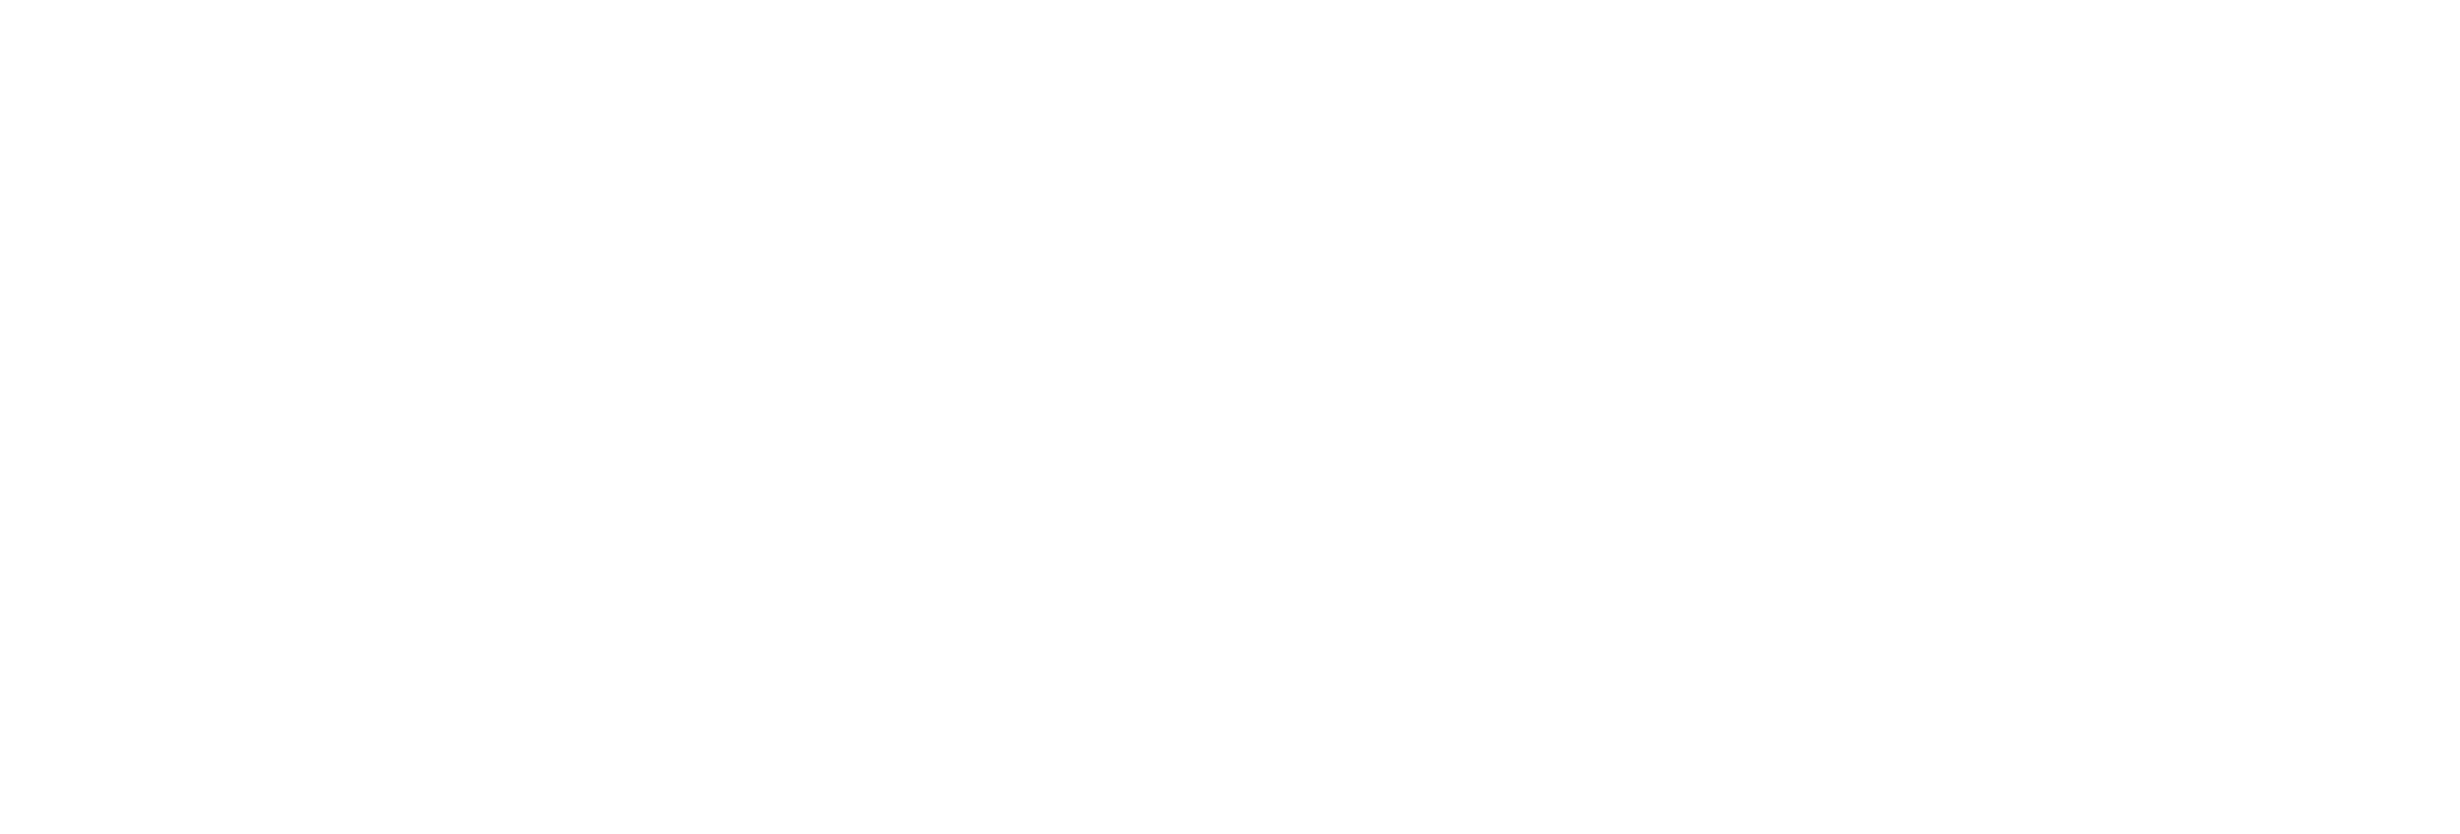 genome analysis logo